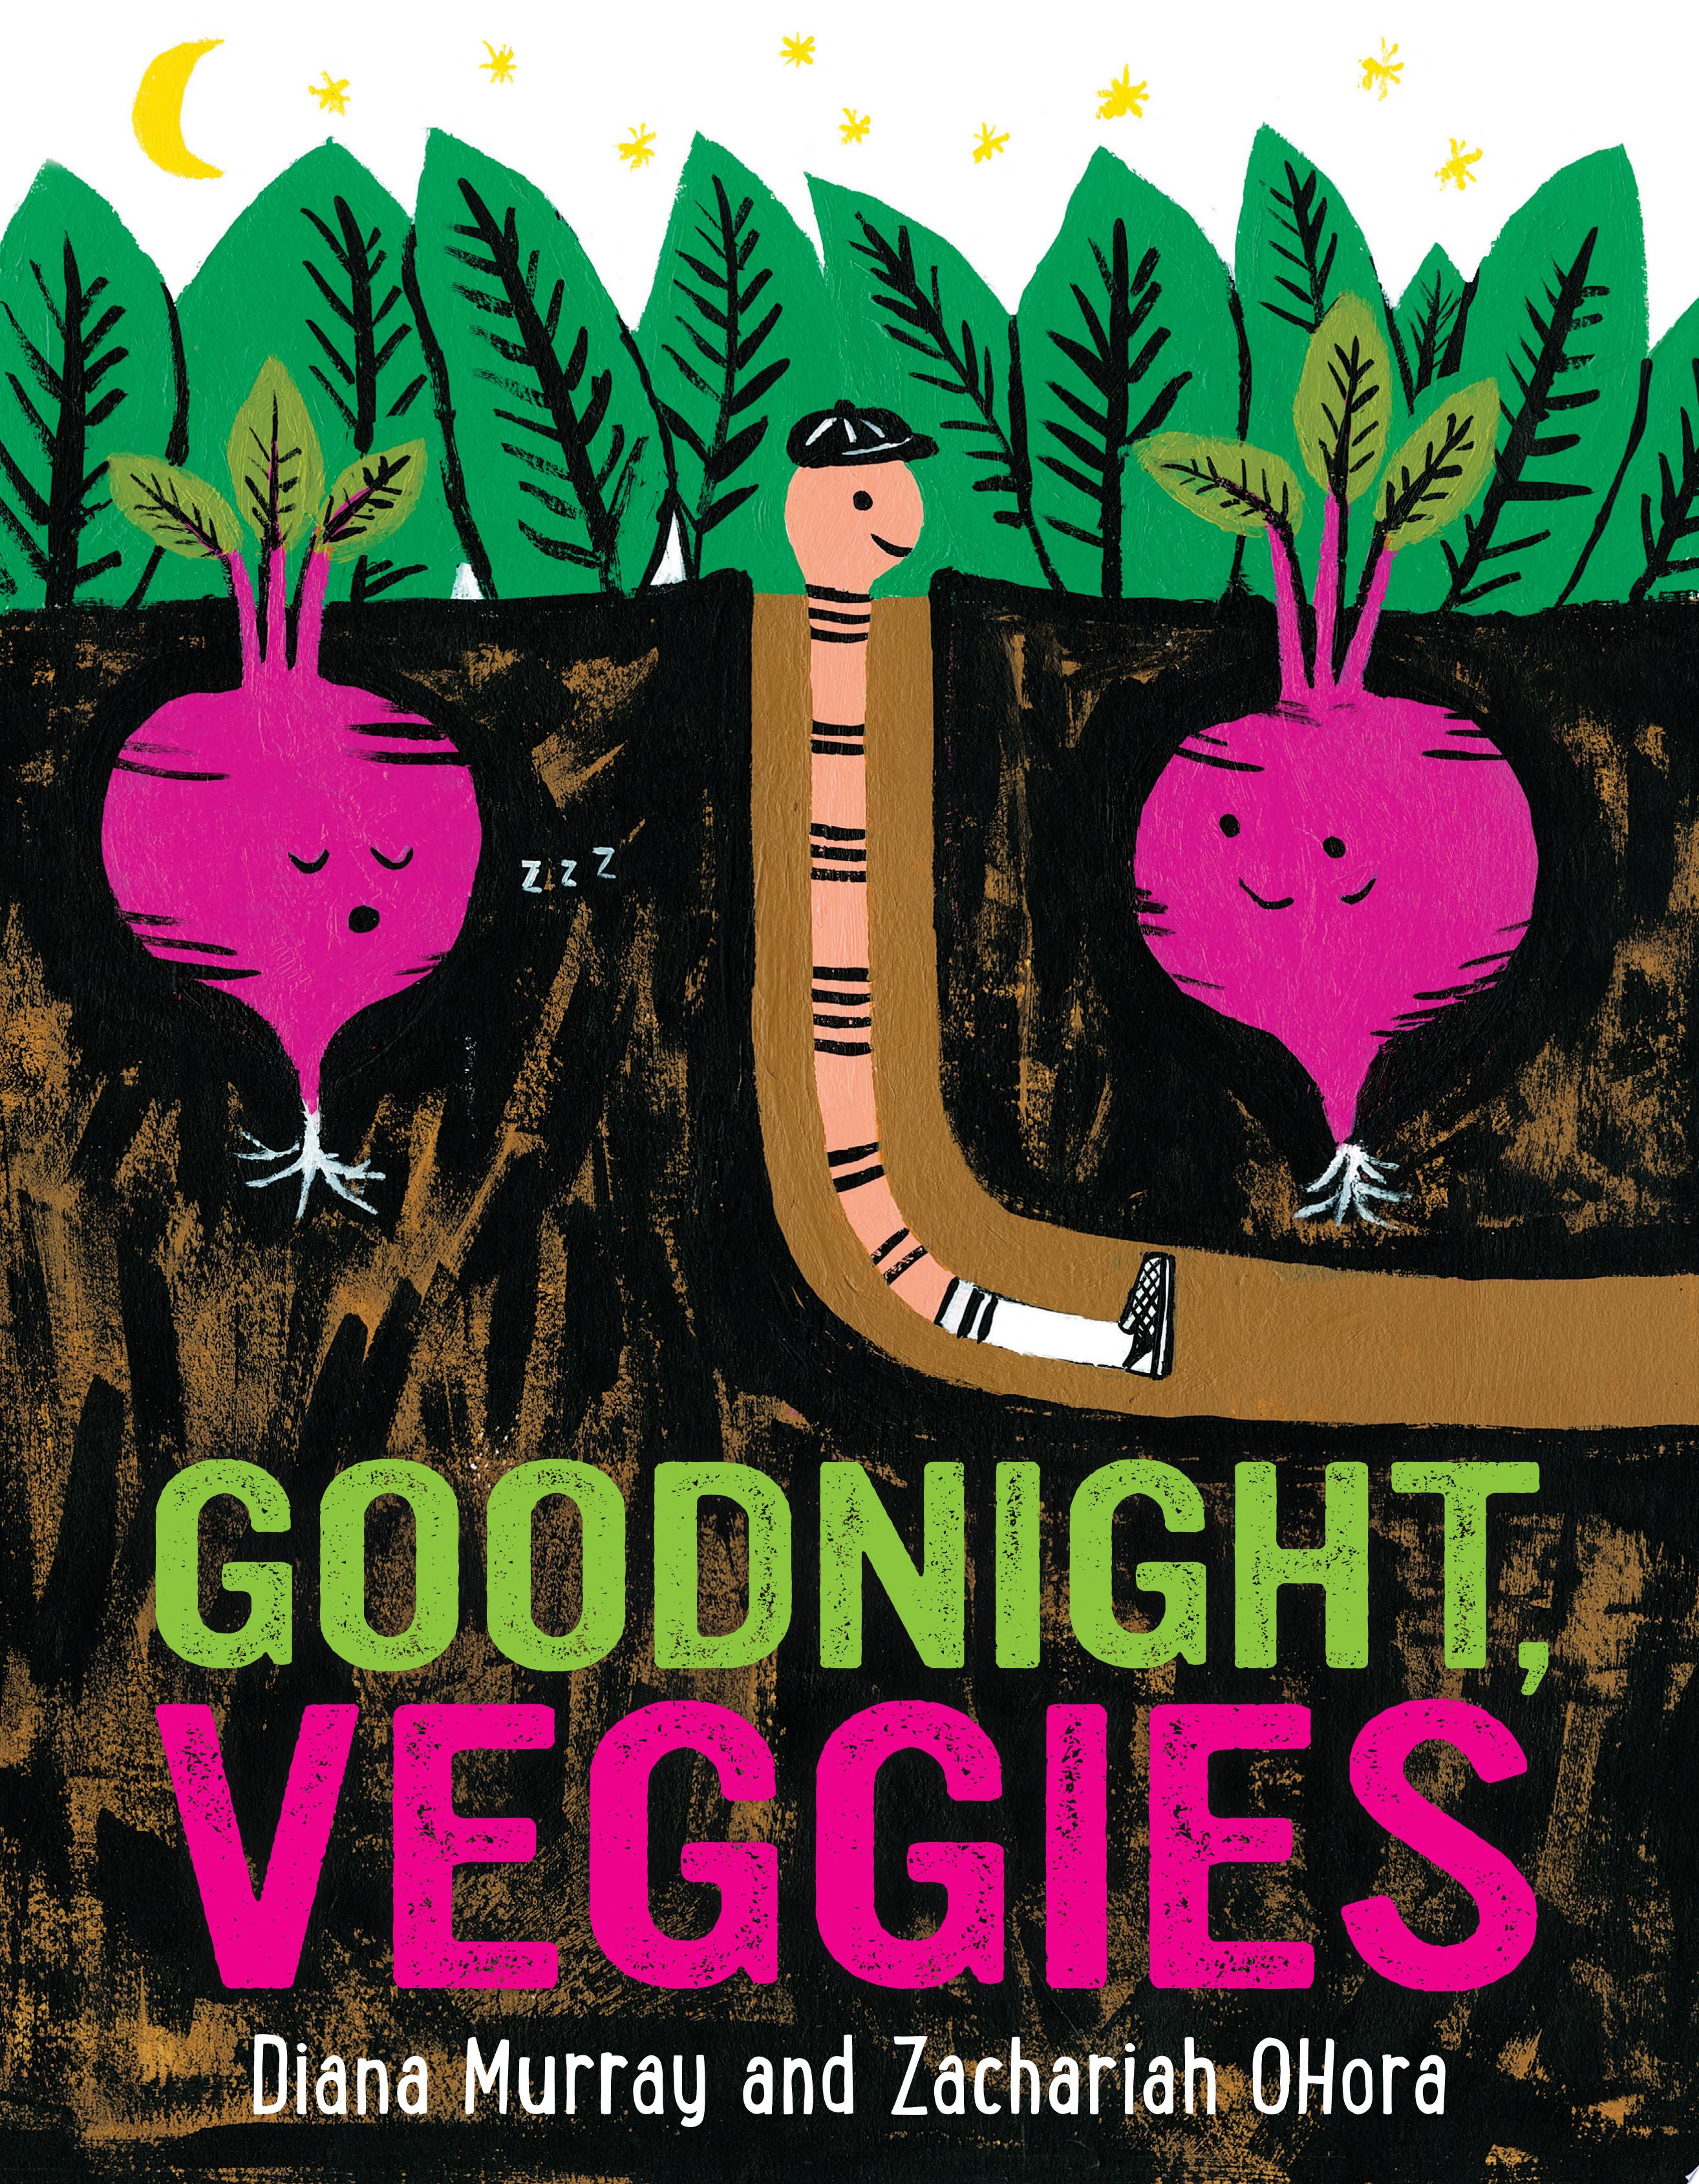 Image for "Goodnight, Veggies"